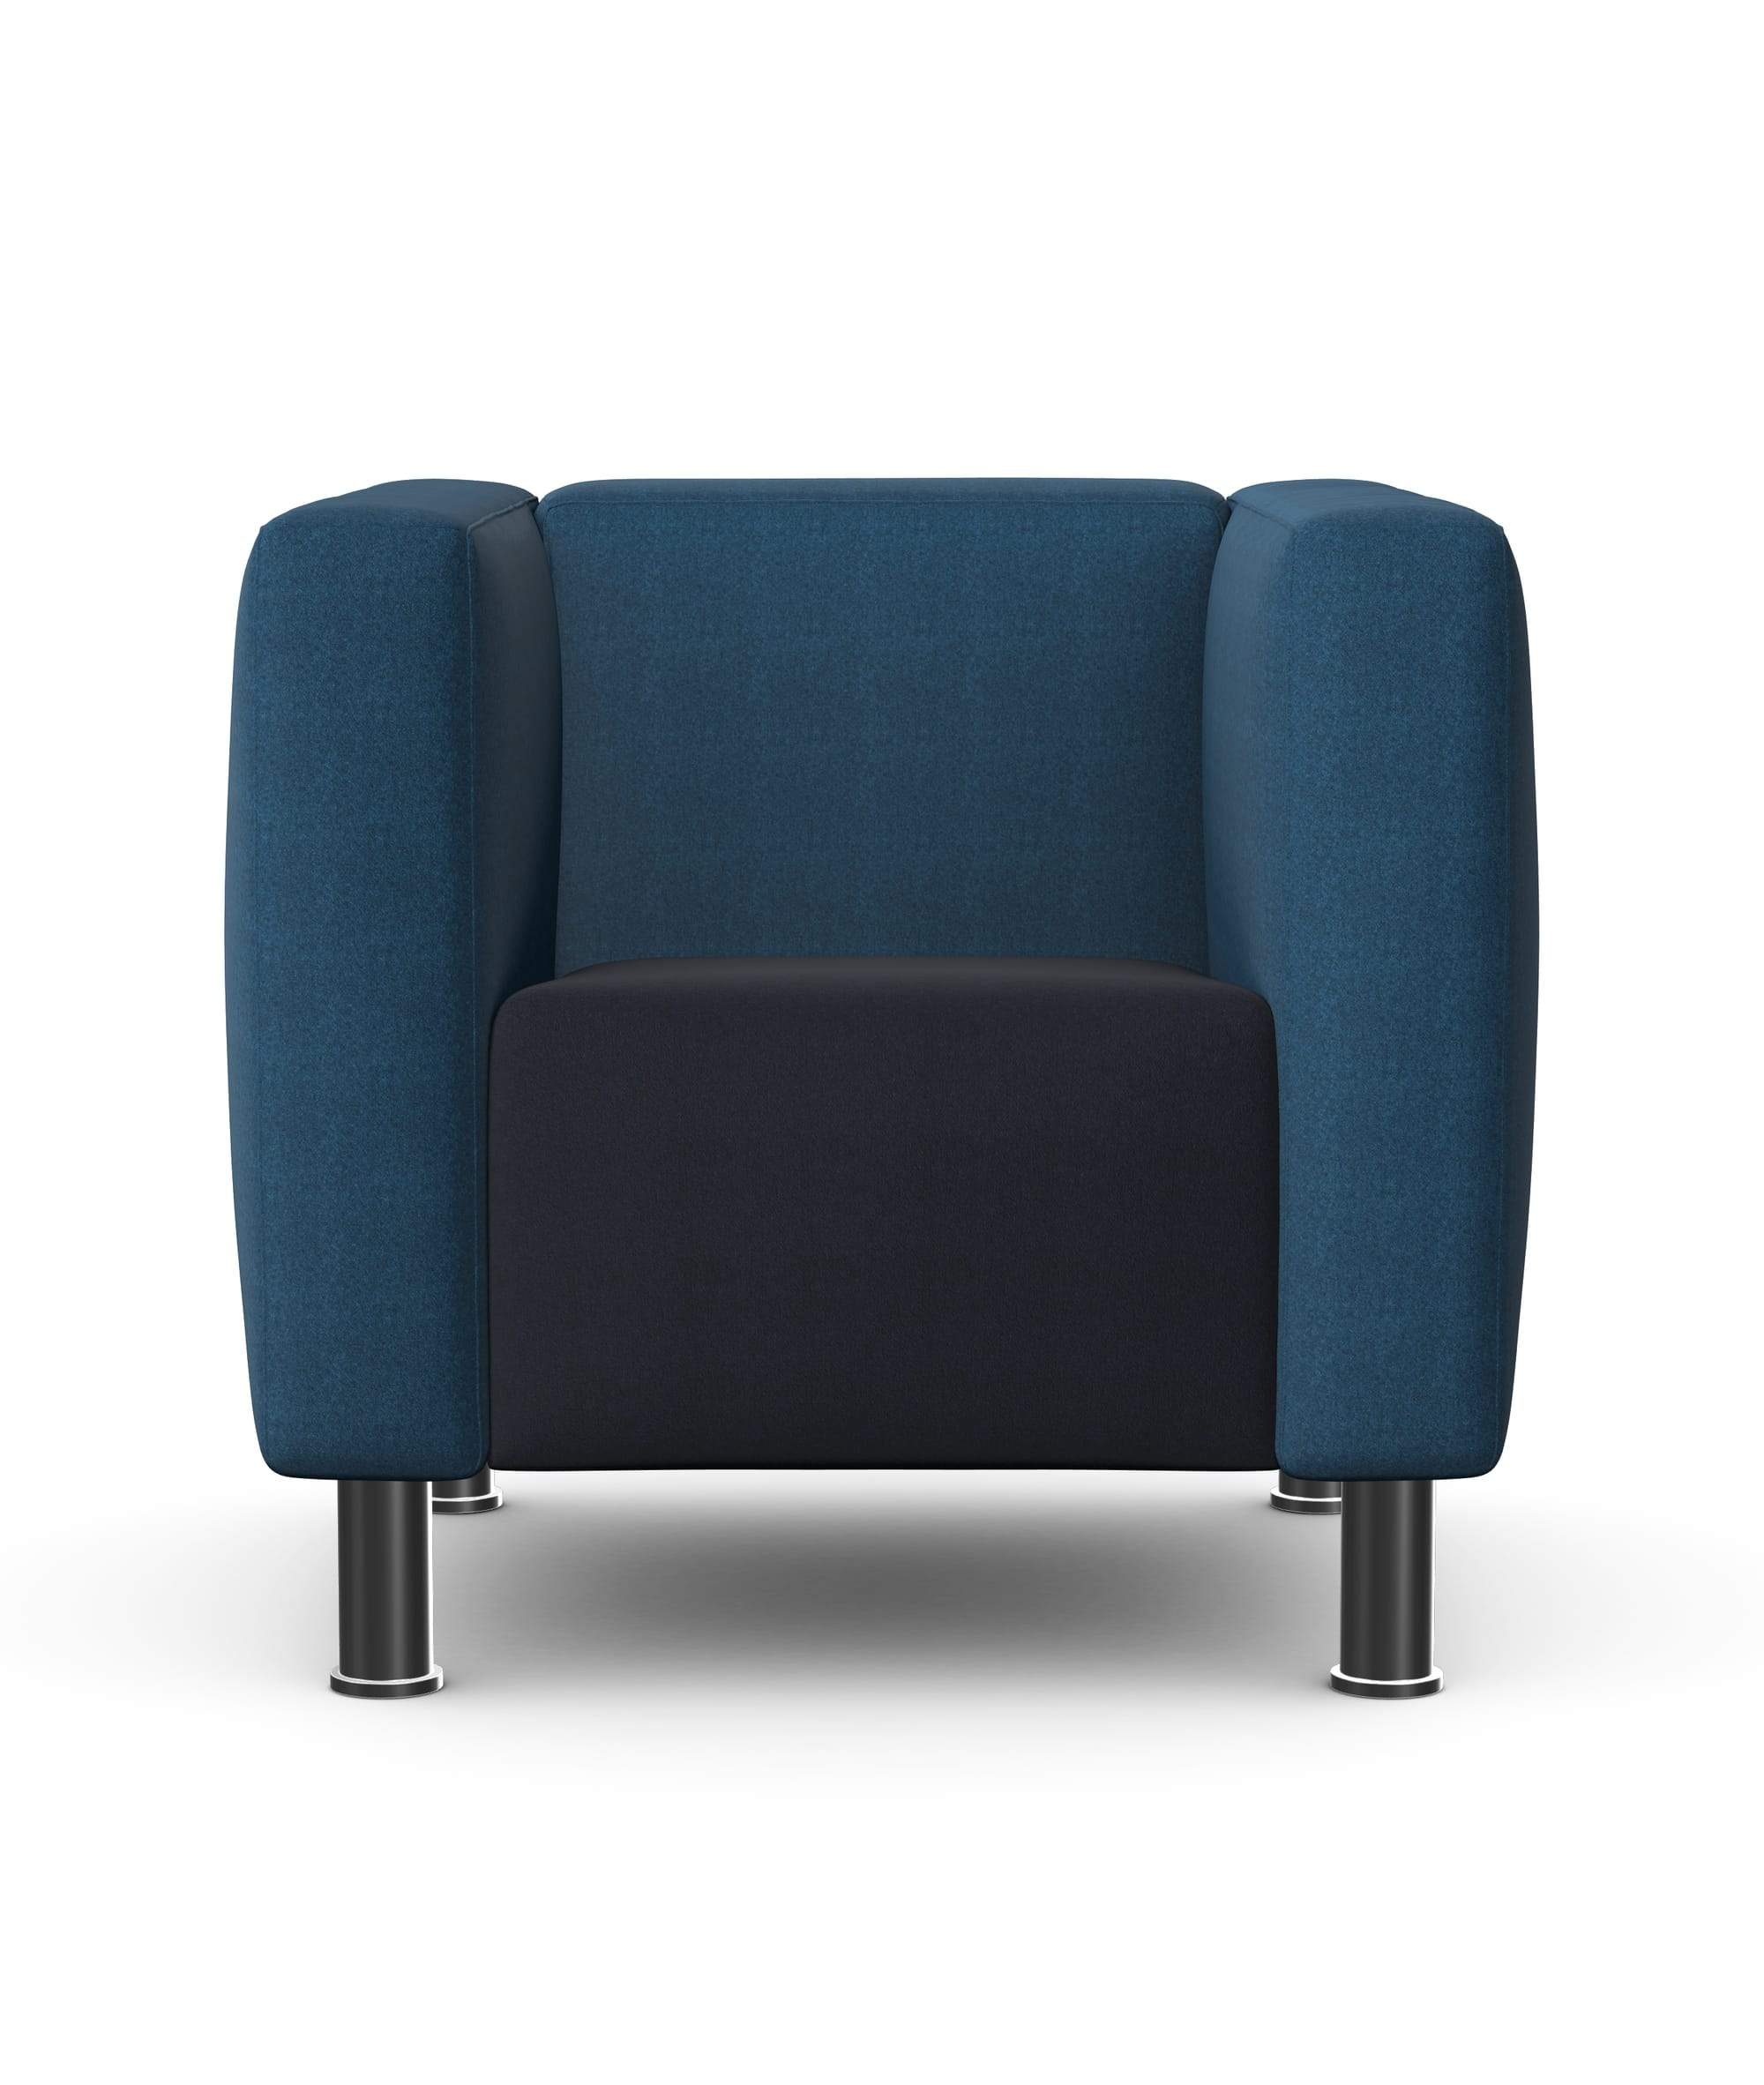 BARRA - One Seat Sofa, Metal Legs